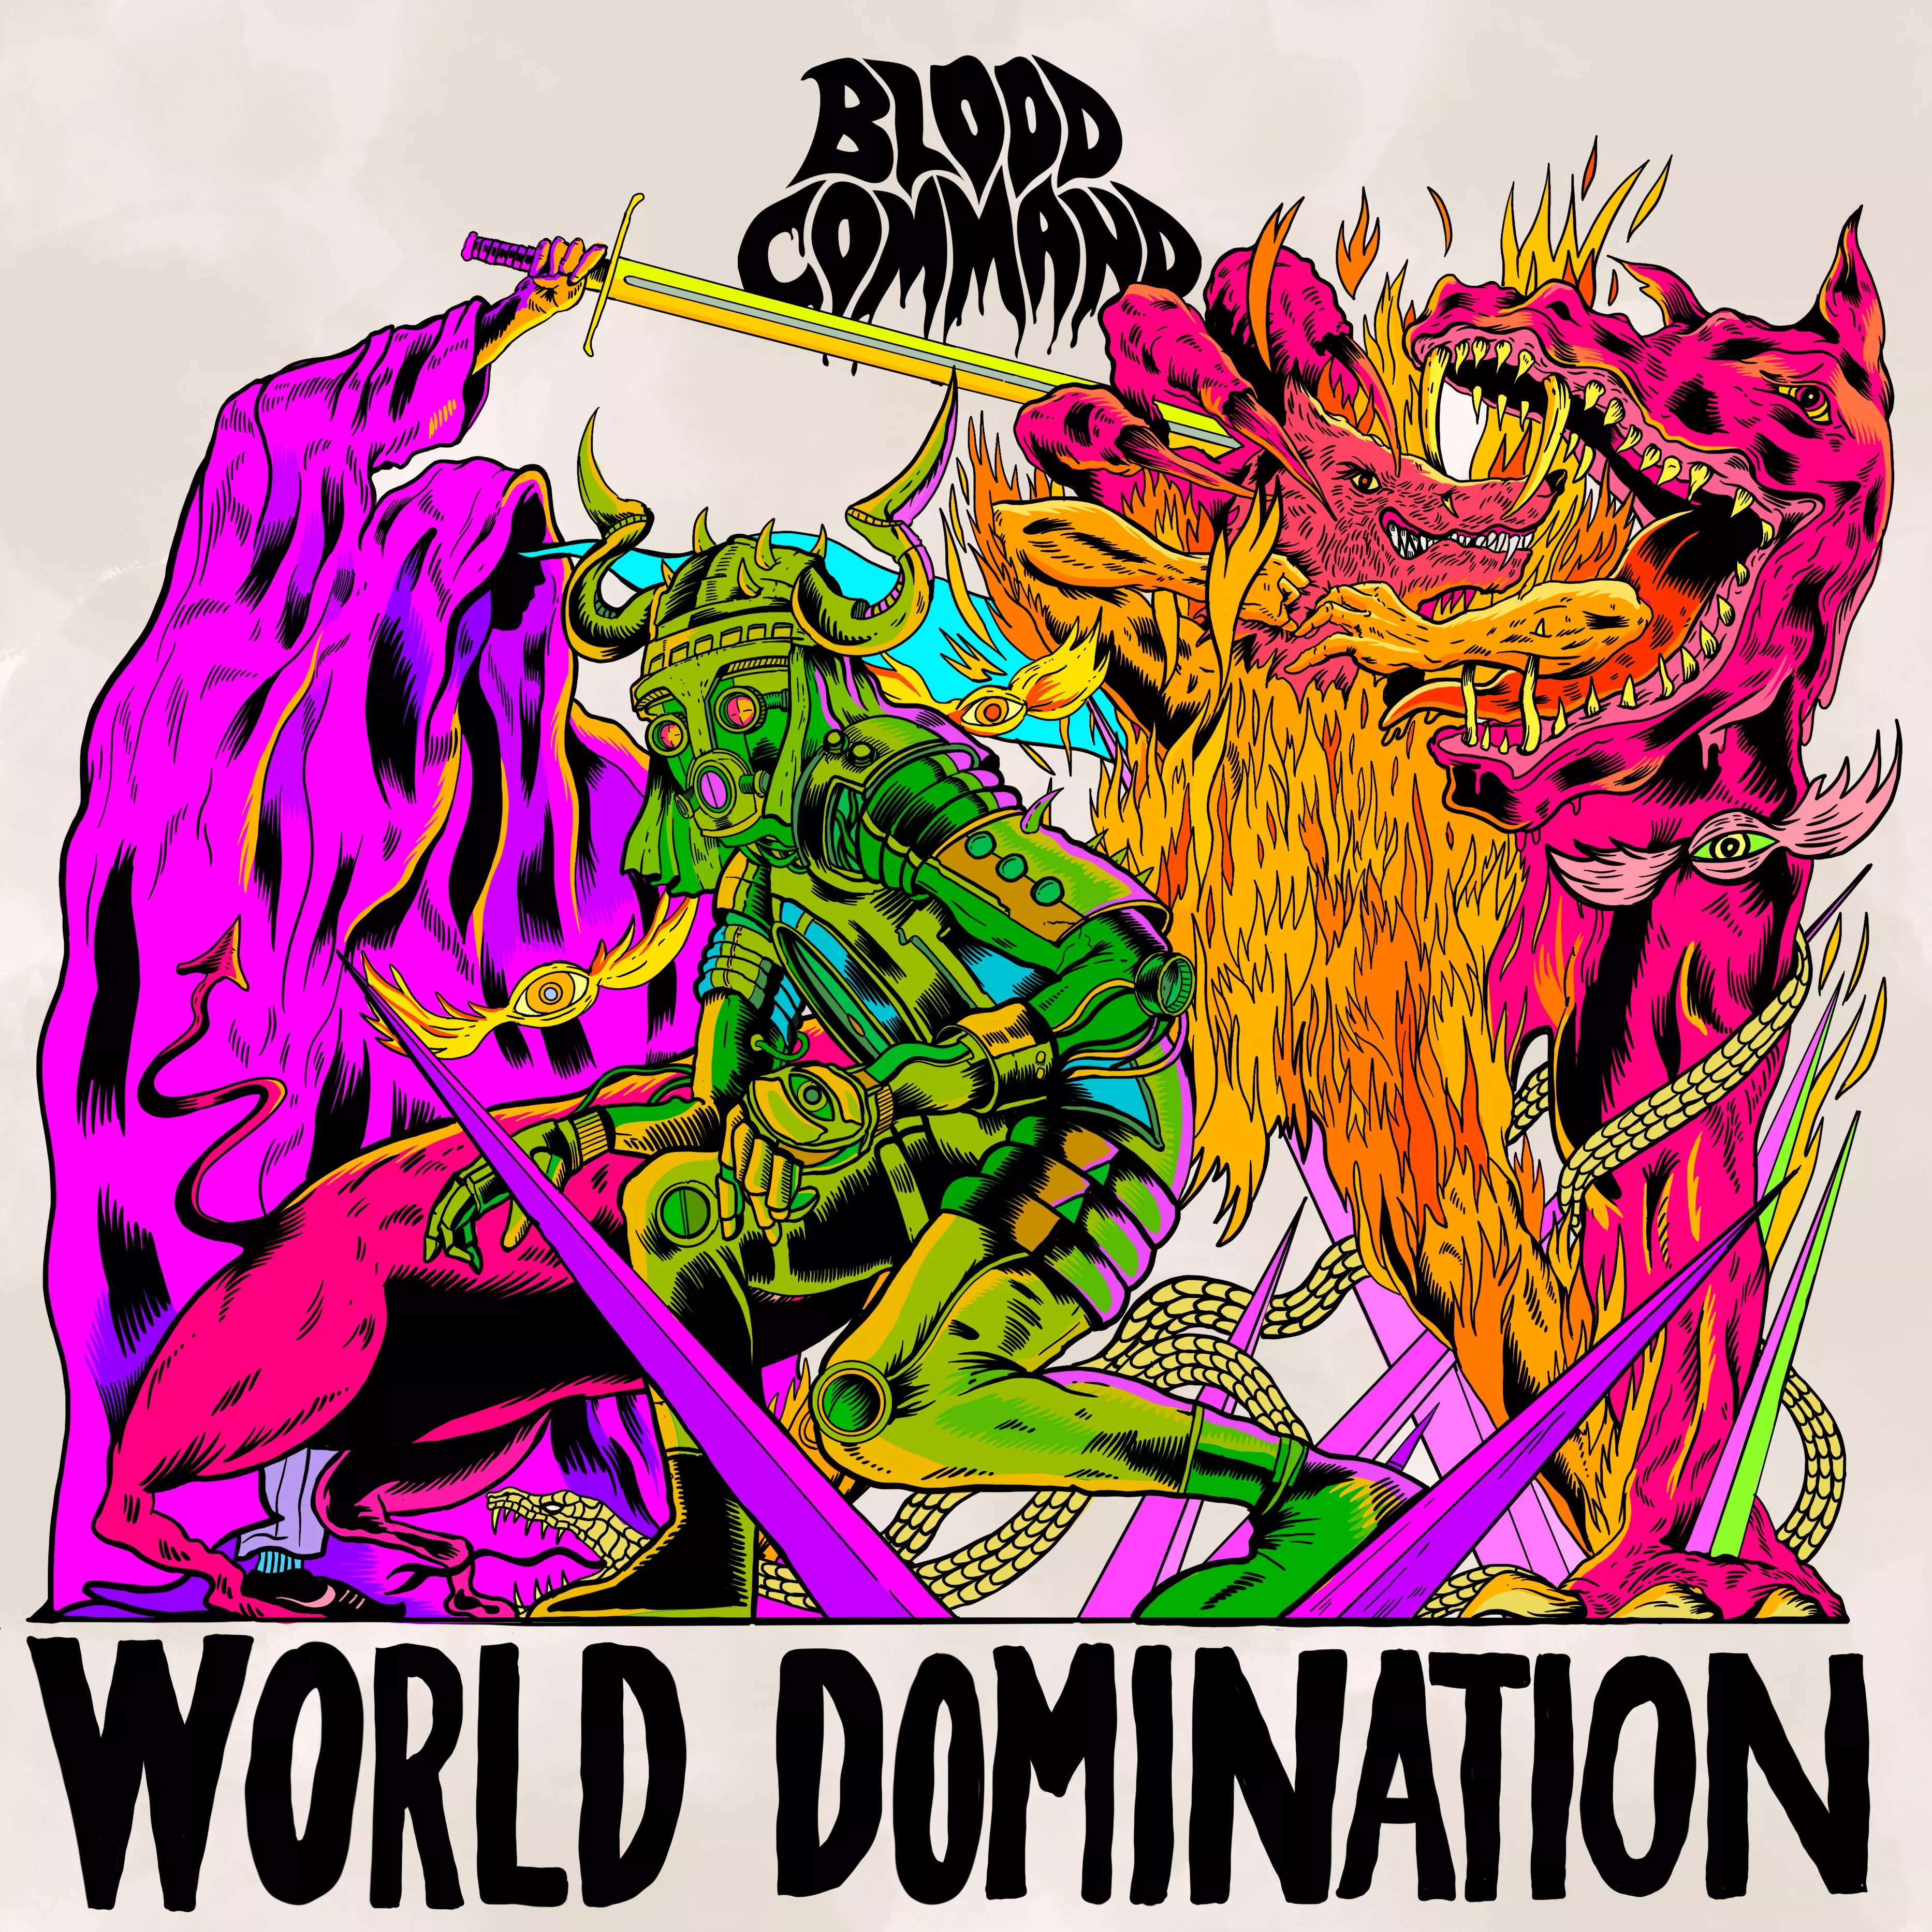 World Domination - Blood Command